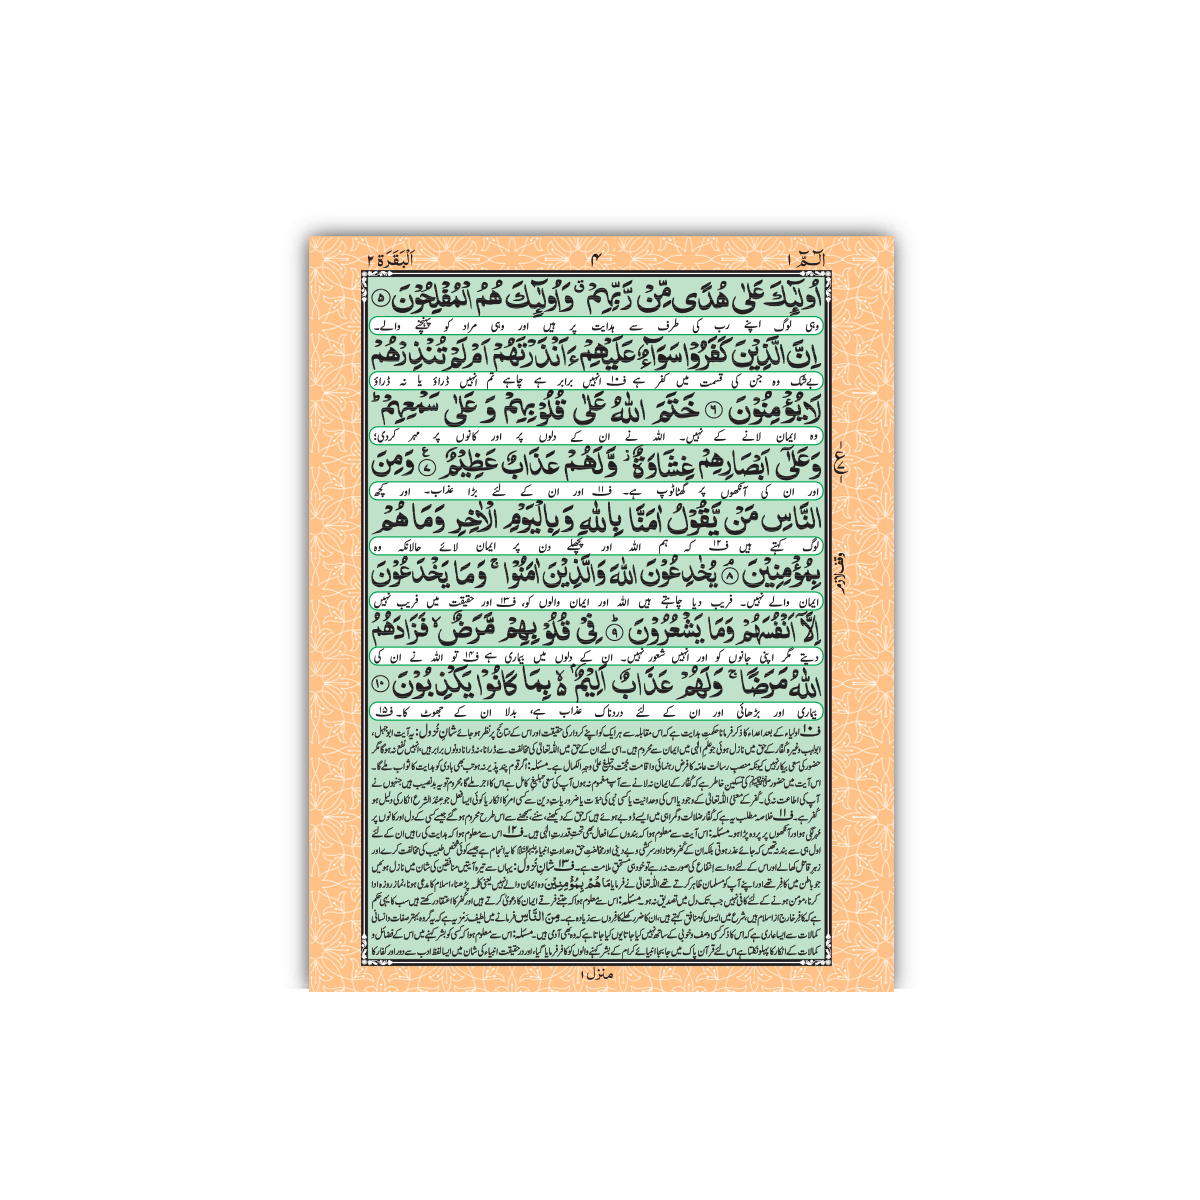 [92/Q] Al-Quran-Ul-Kareem With Kanzul Iman & Khazain-Ul-Irfan (Urdu Translation) - Gift Edition